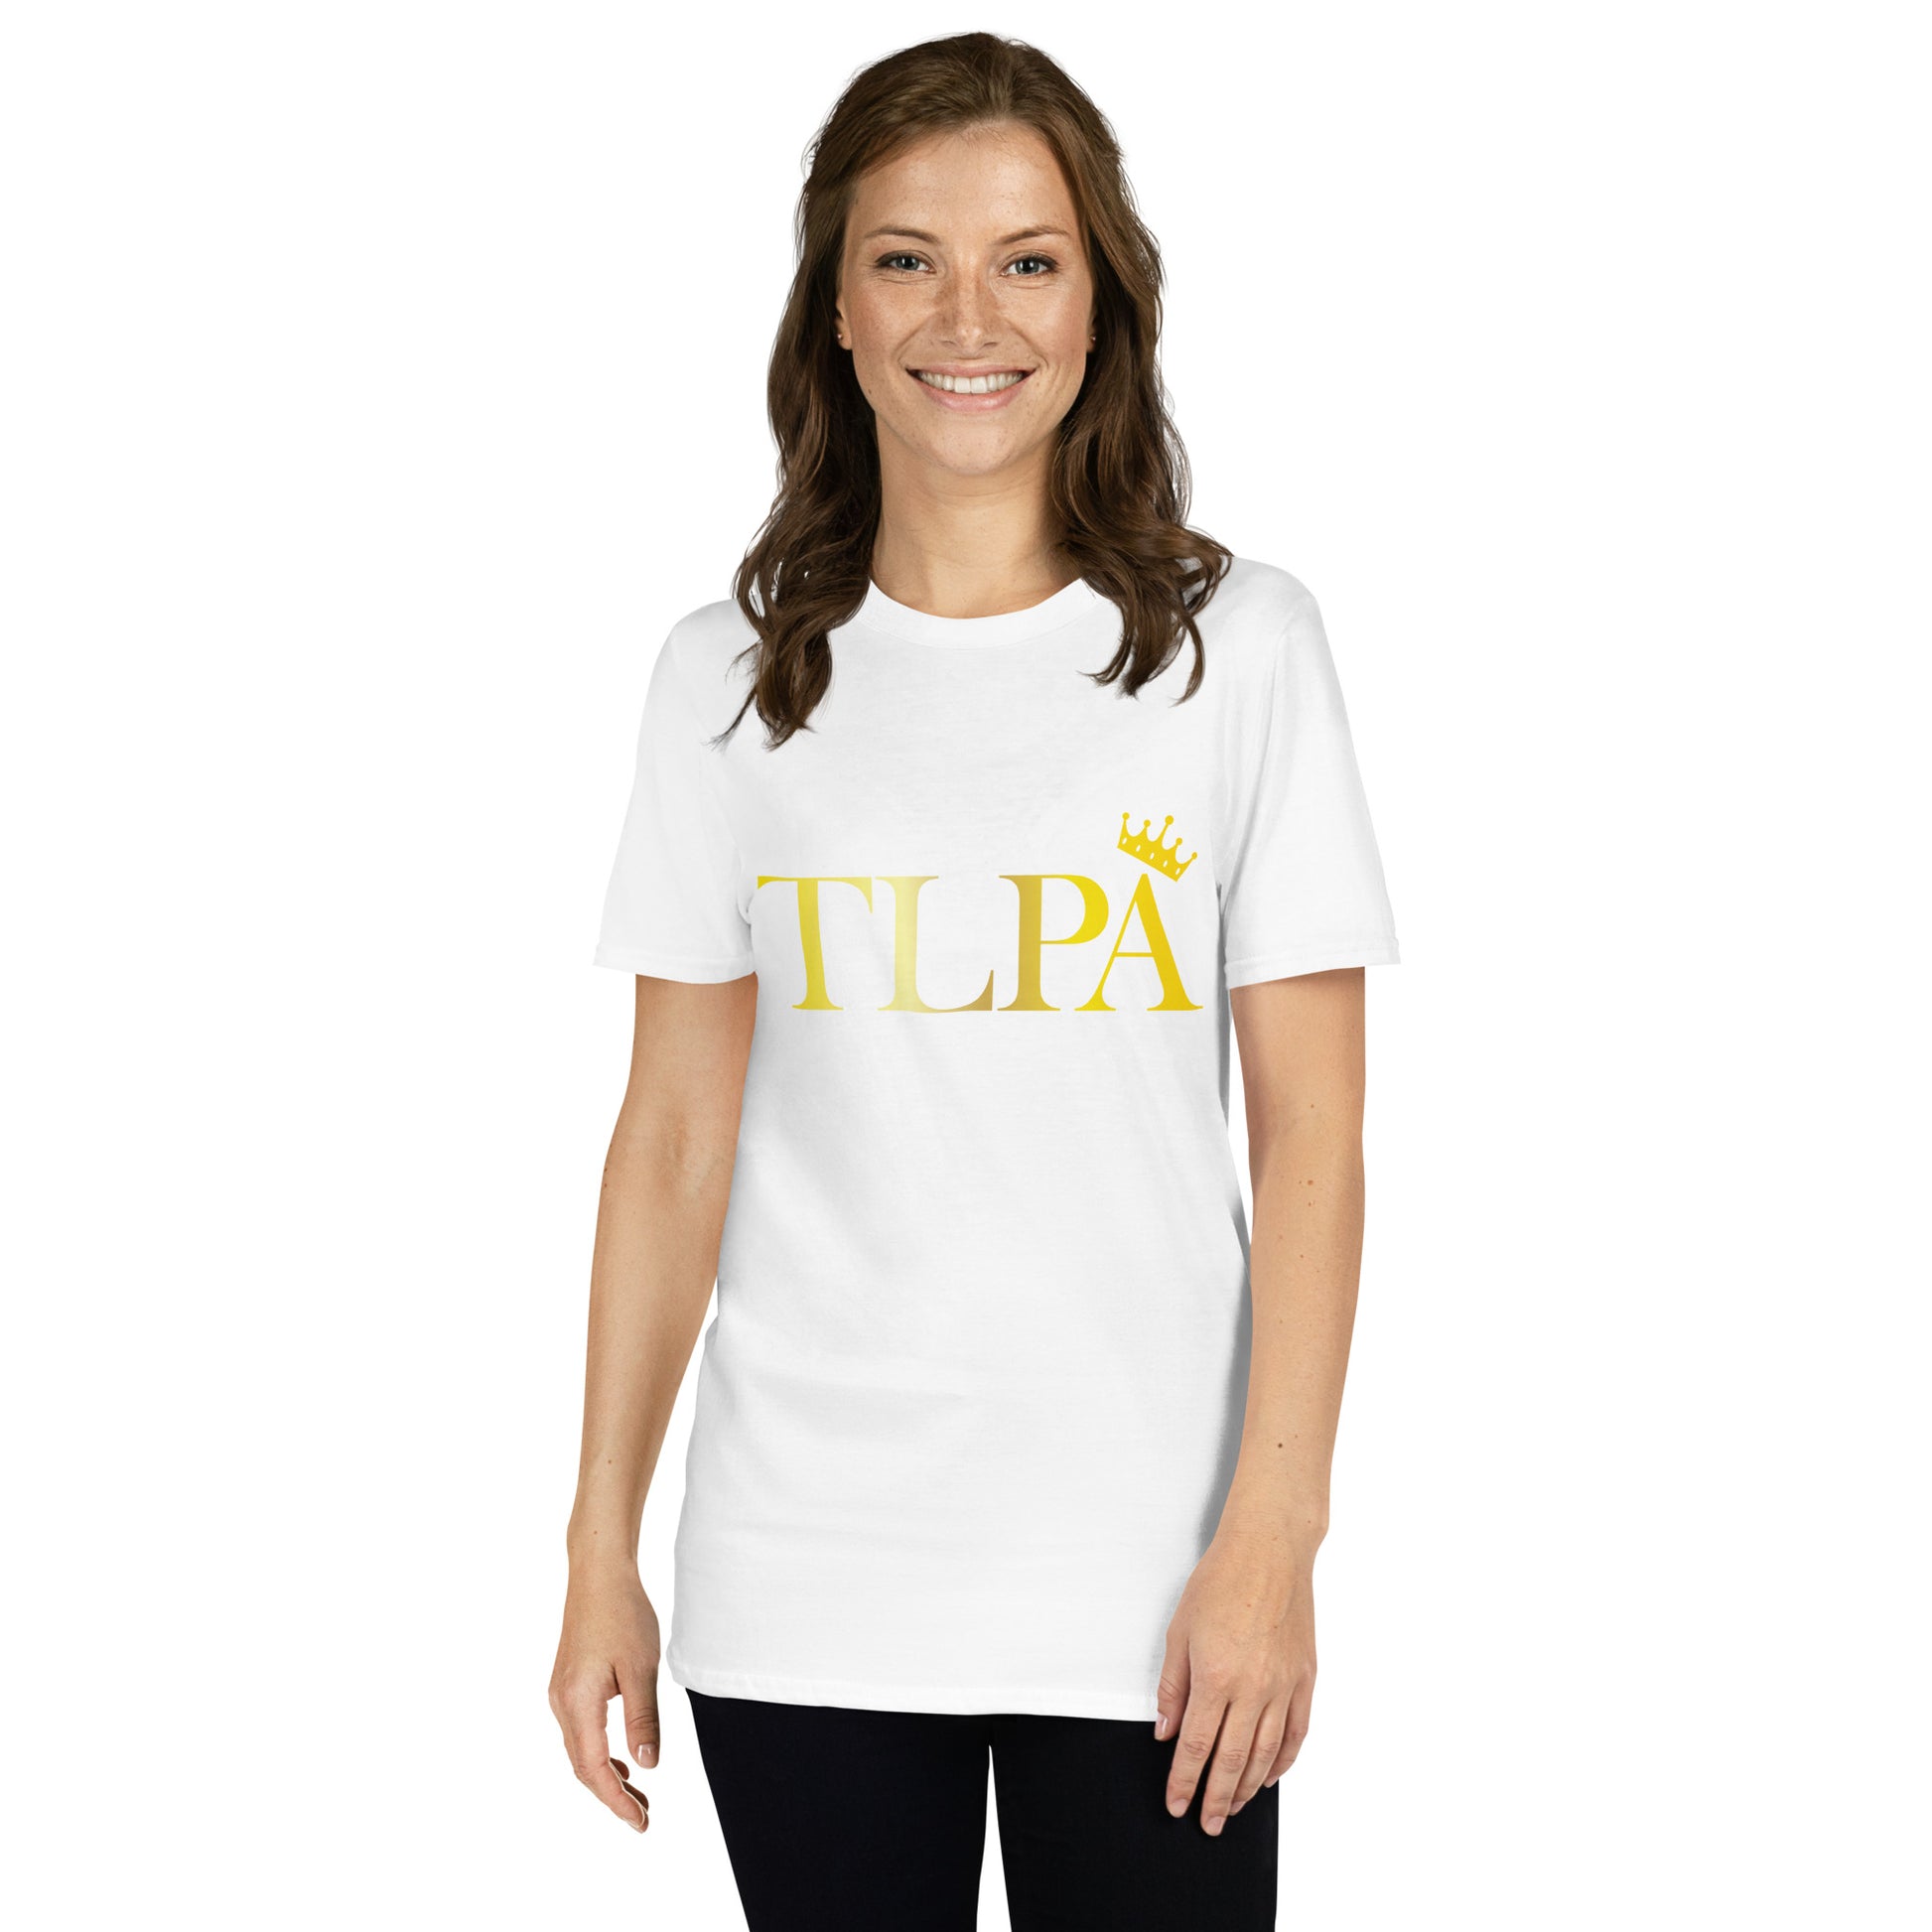 TLPA Goddess Athena Women's Short-Sleeve T-Shirt - SHOPTLPA.COM